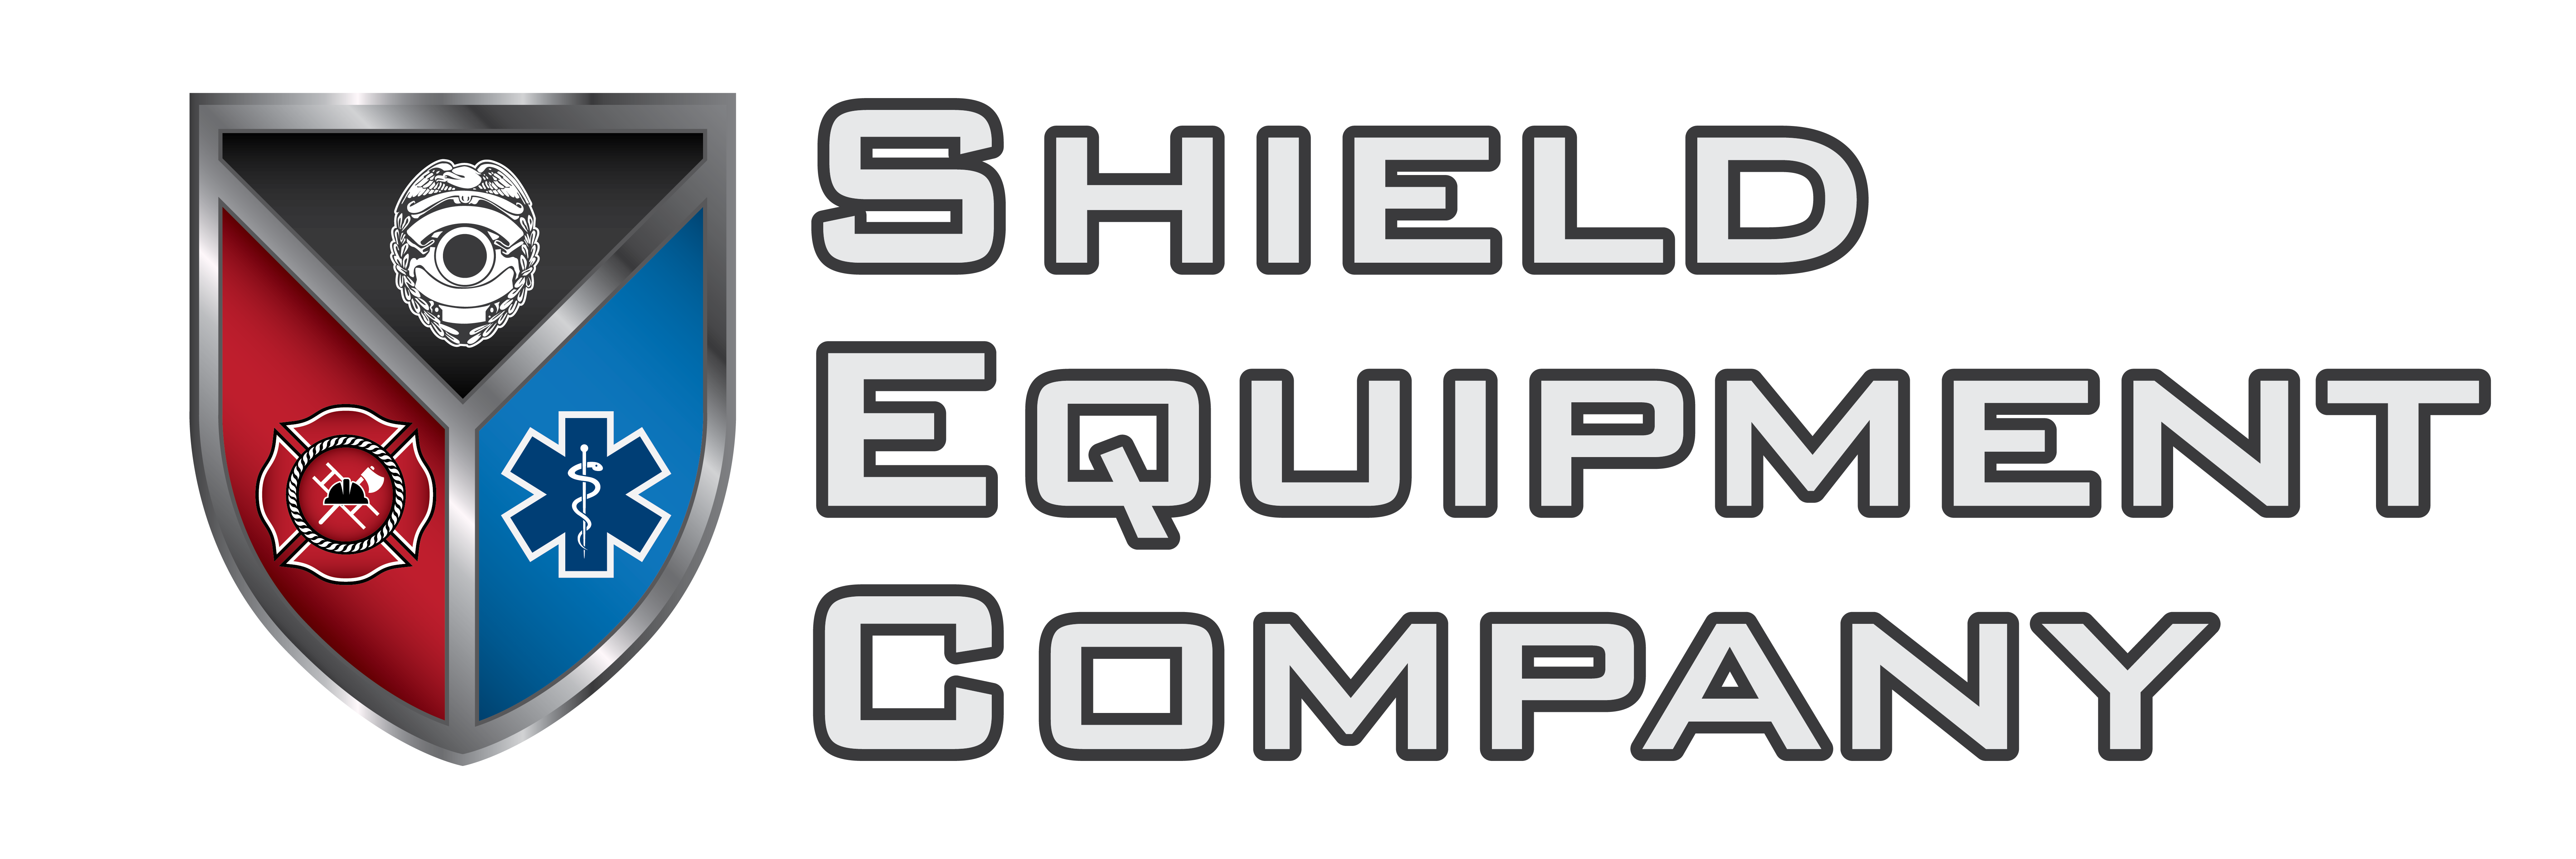 Shield Equipment Company